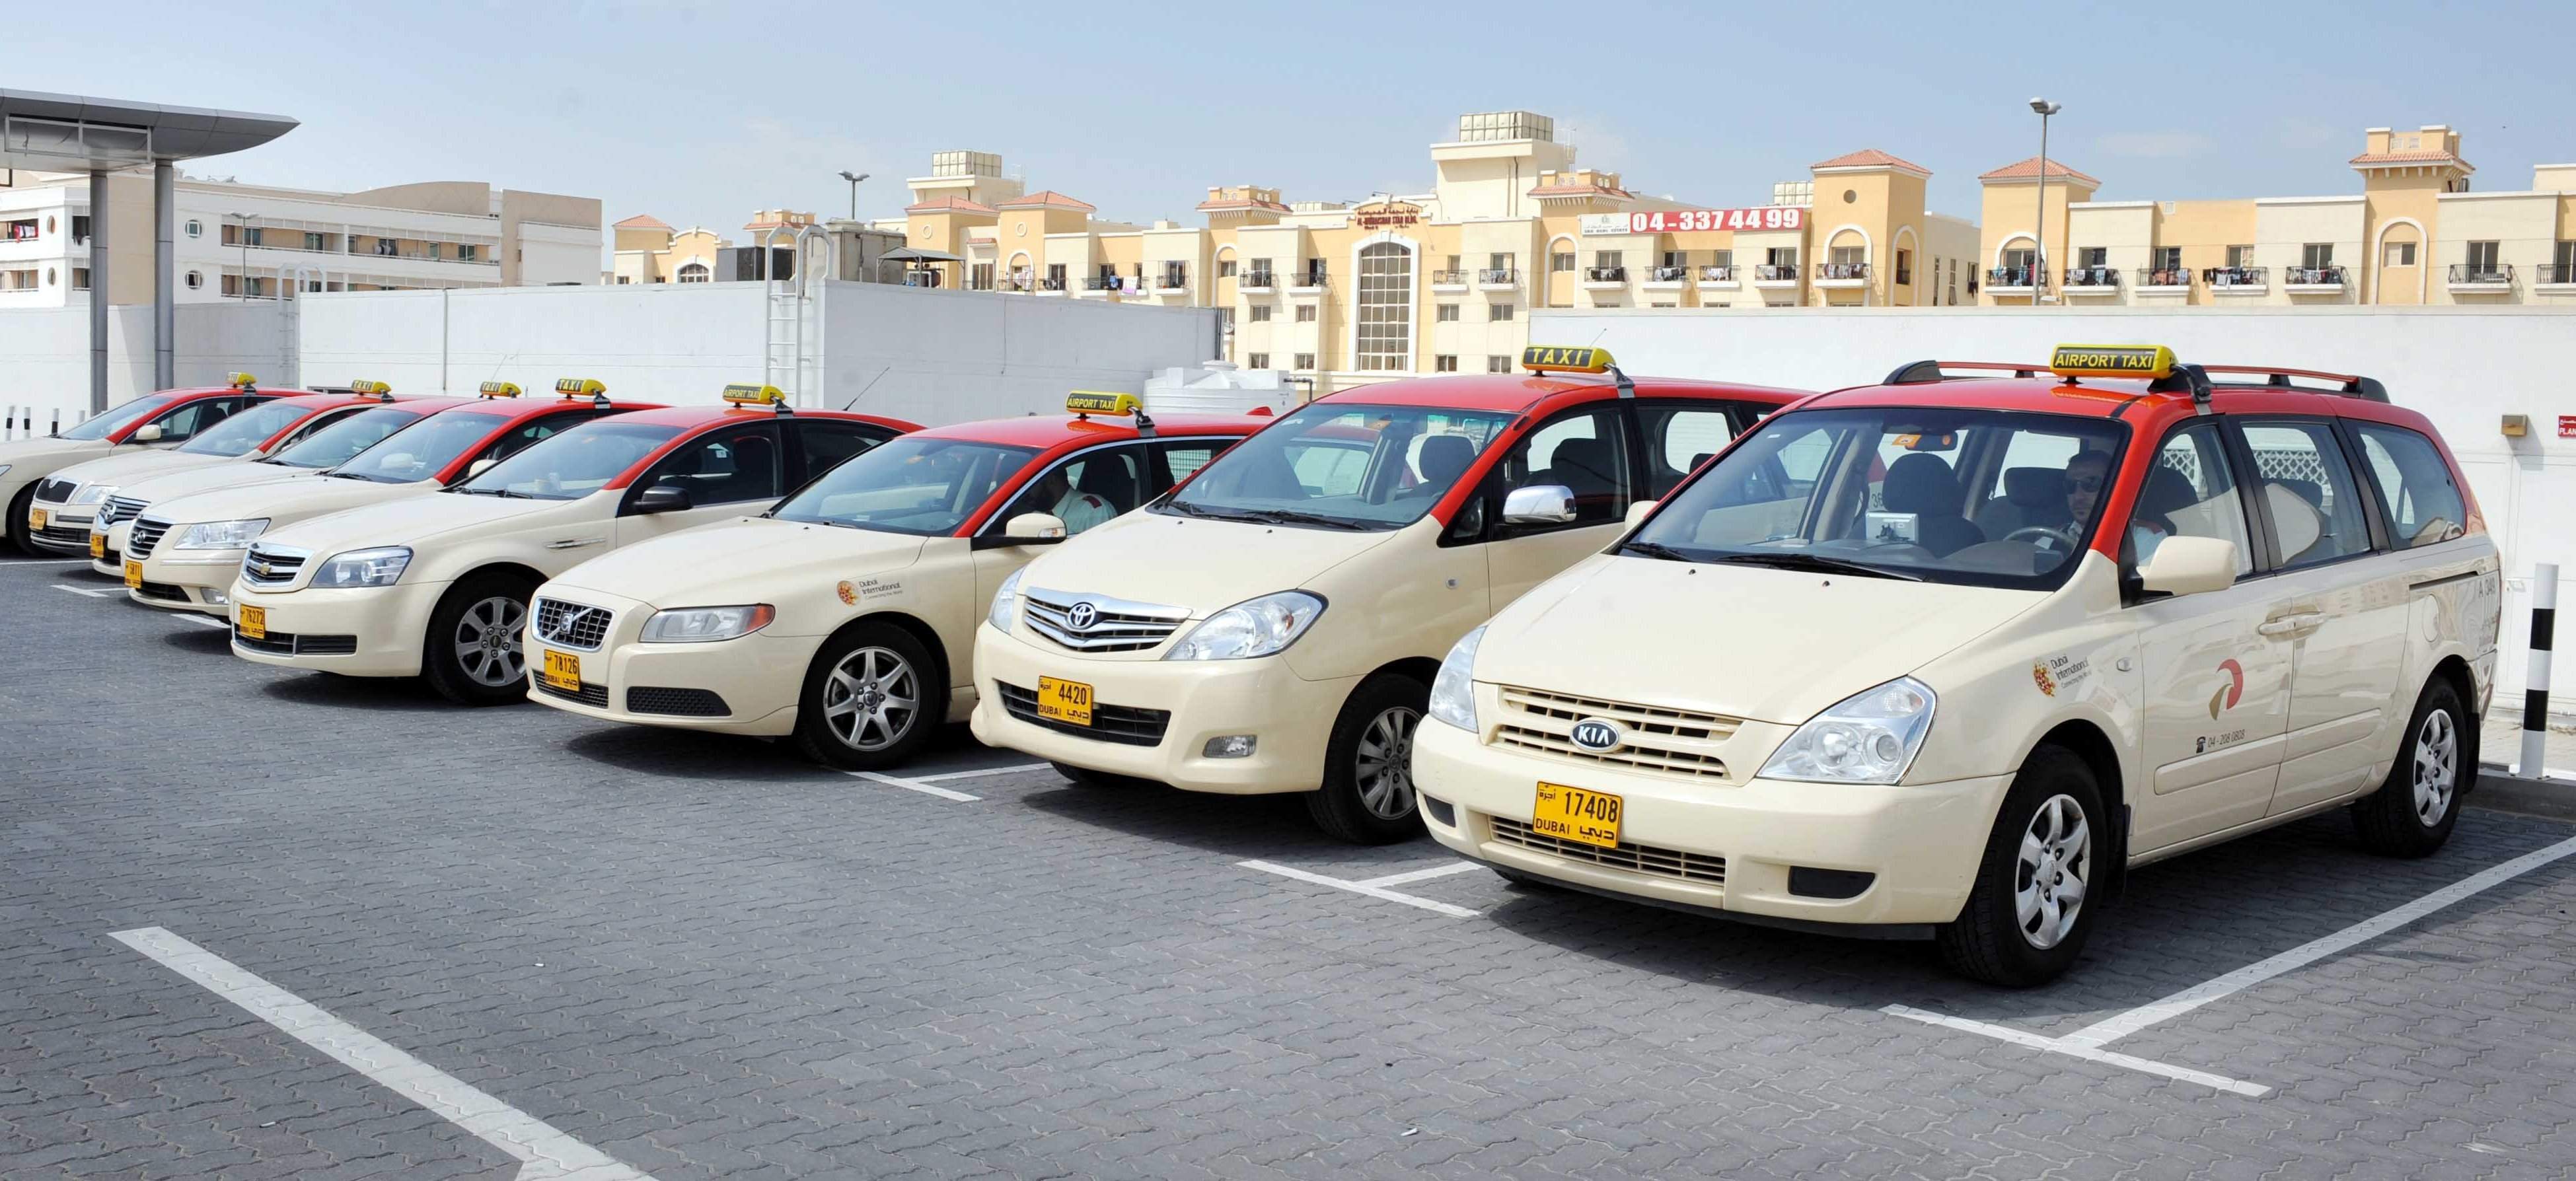 Dubai Taxi to Use Telematics for its Limousine Fleet